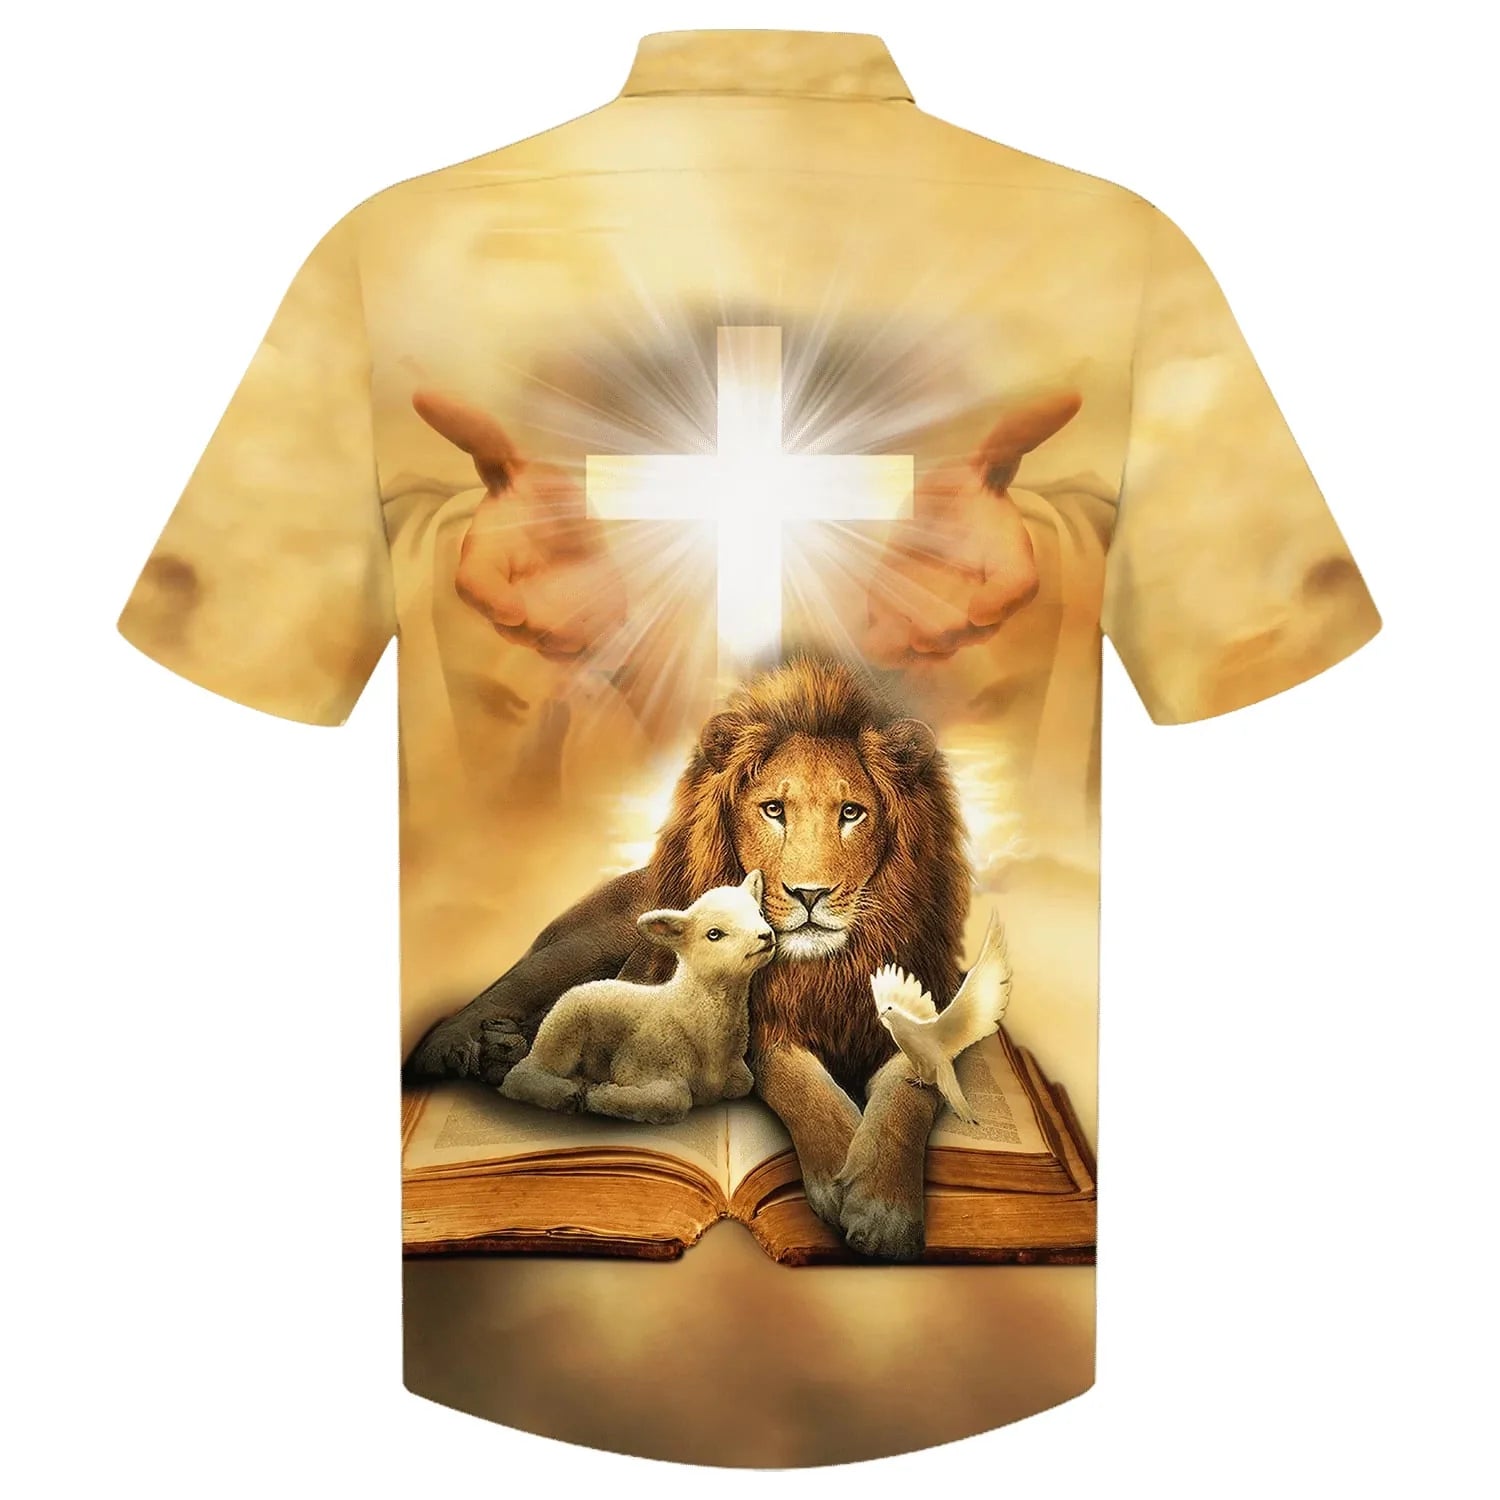 Christianartbag Hawaiian Shirt, Lion Of Judah Lamb Of God Jesus Christ Hawaiian Shirt, Christian Hawaiian Shirts For Men & Women. - Christian Art Bag